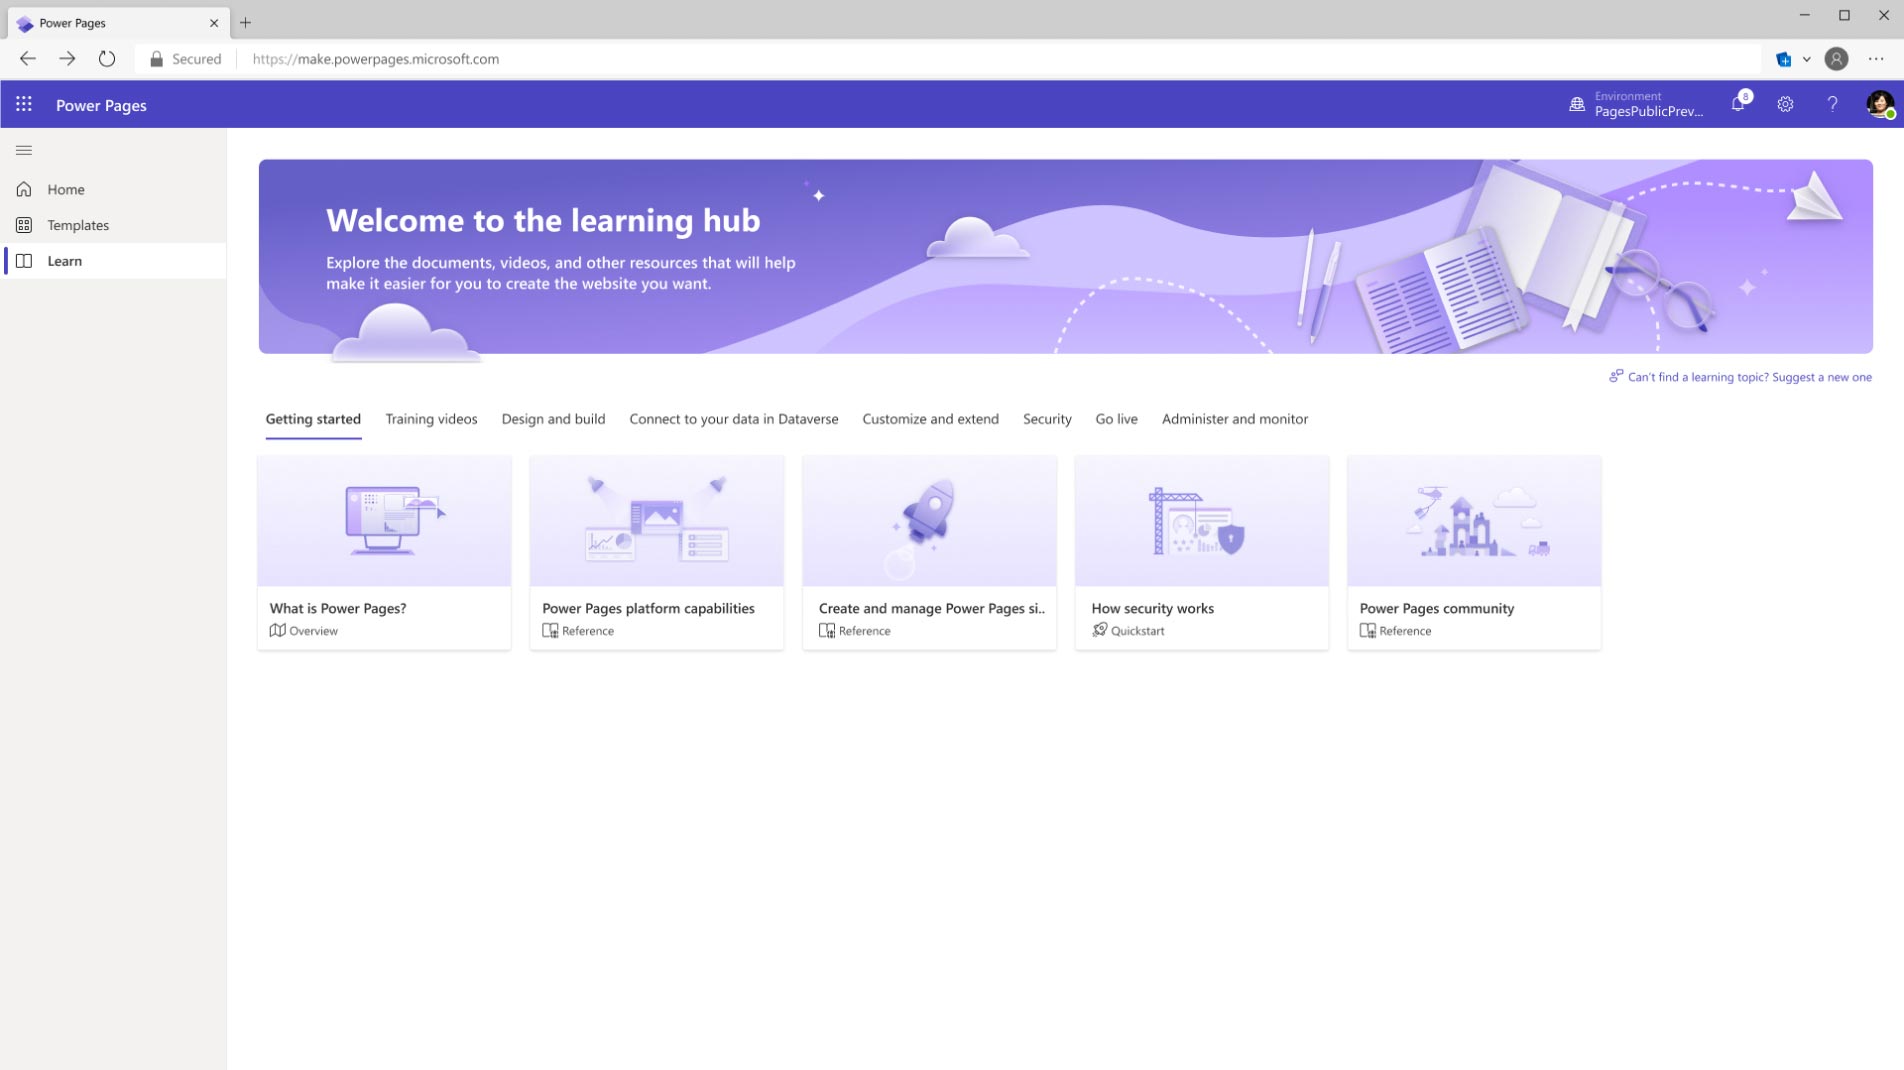 Learning hub portal